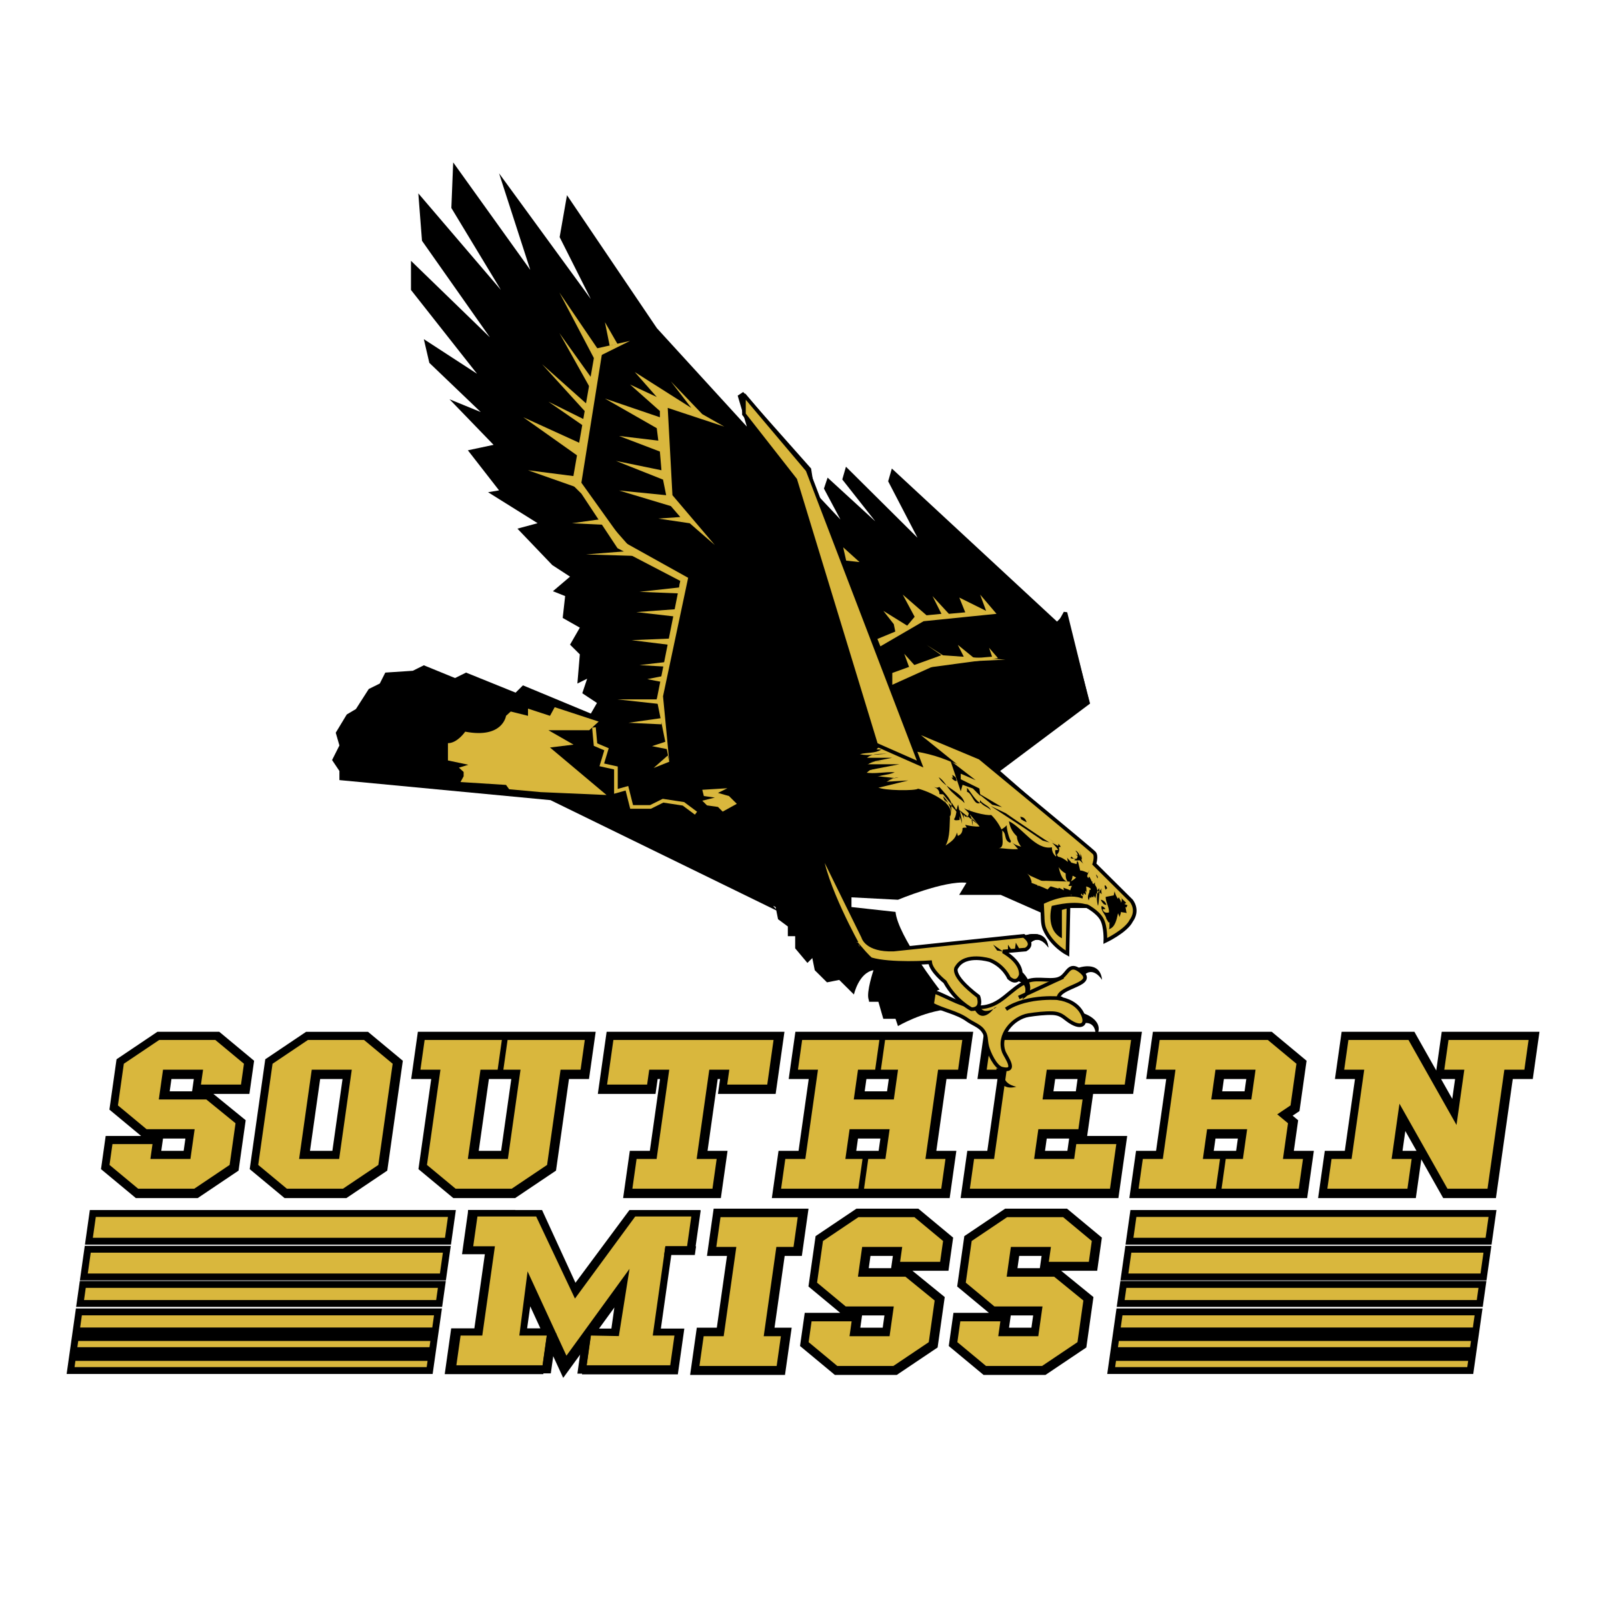 Southern Miss Golden Eagles Logo